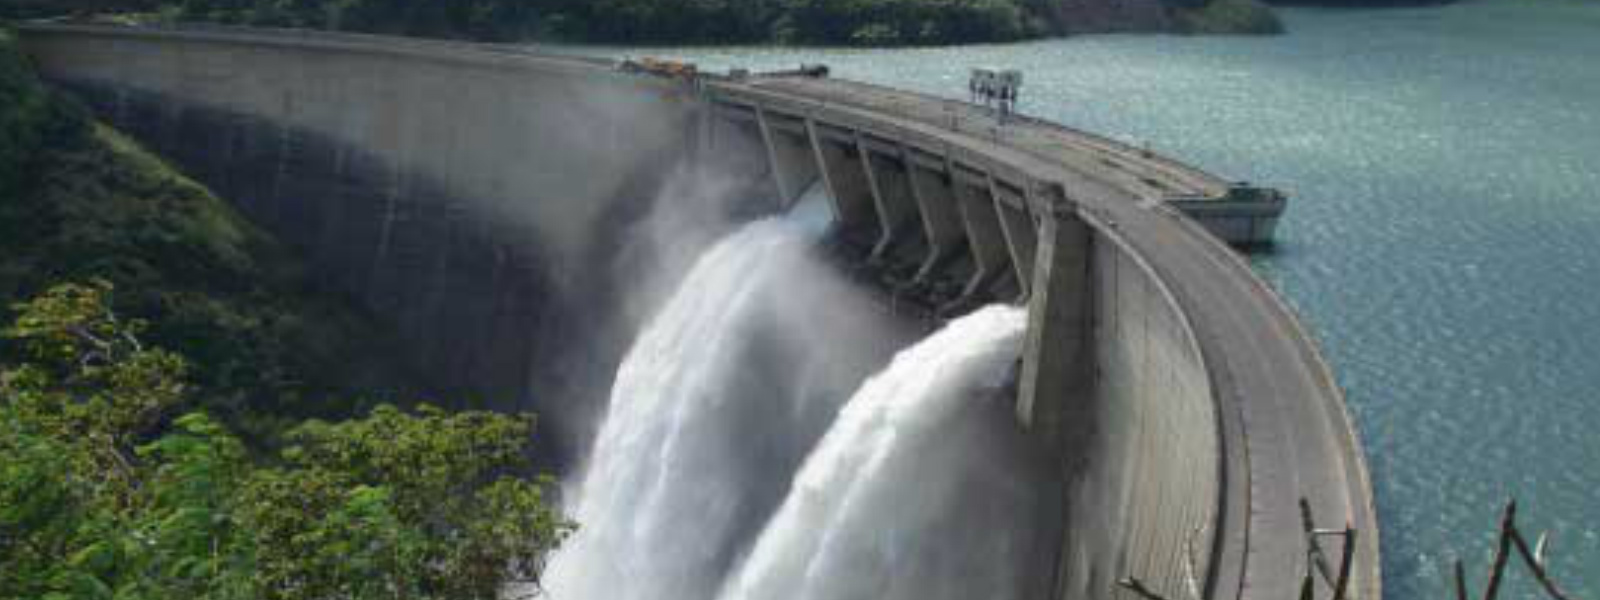 Spill gates of several reservoirs still open: DMC